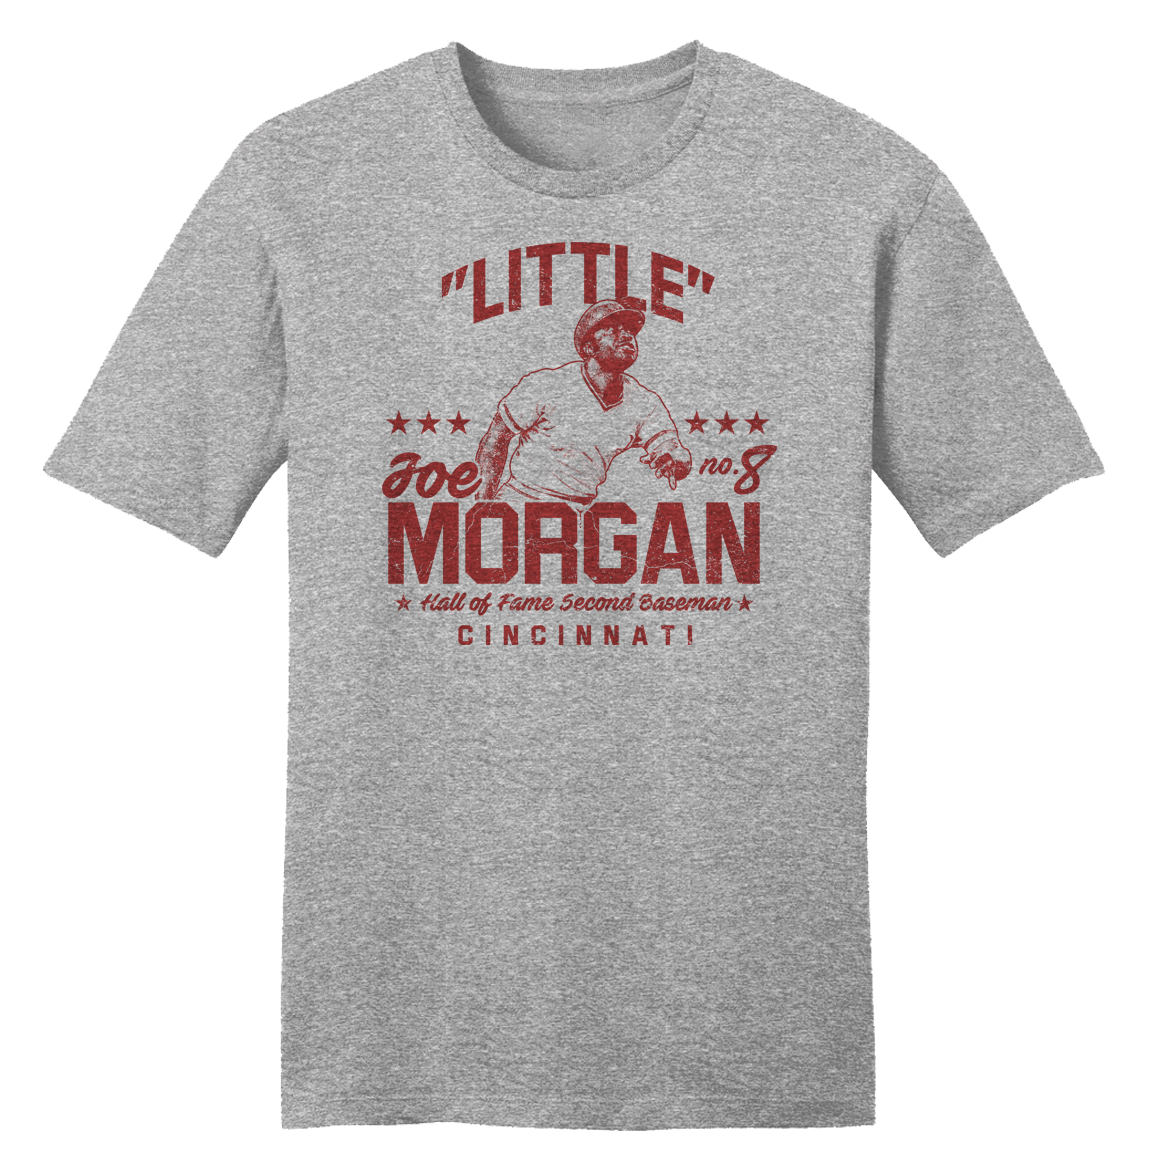 "Little" Joe Morgan - Hall of Fame Second Baseman